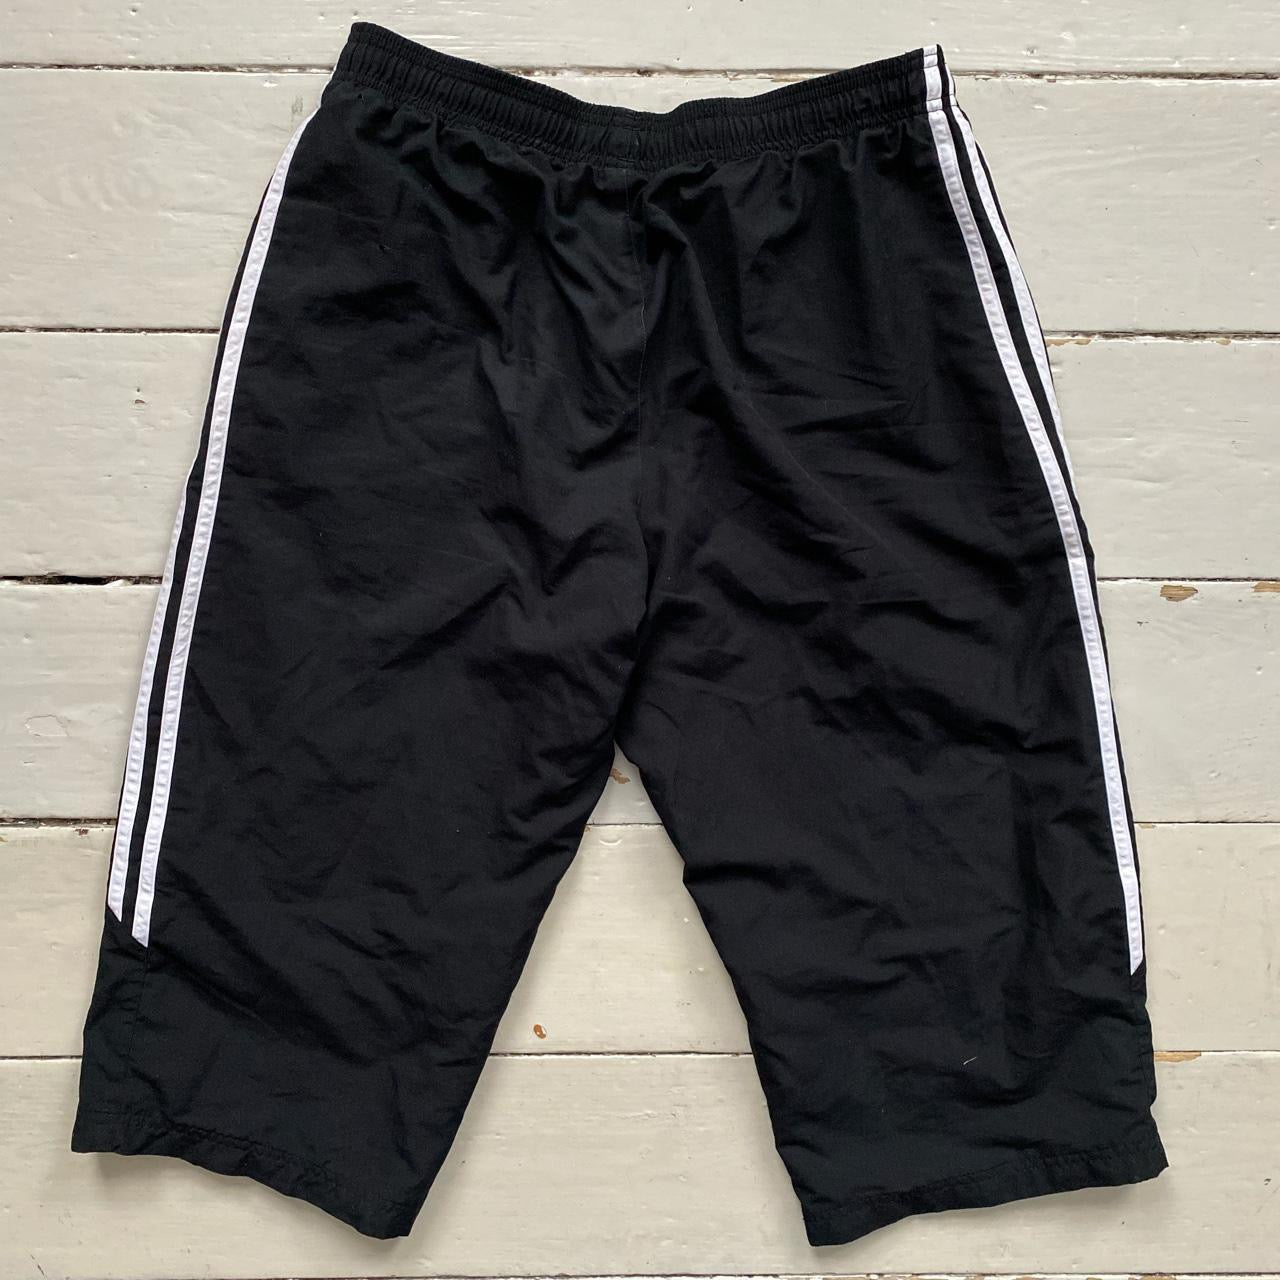 Adidas Black Shell Shorts (34W)